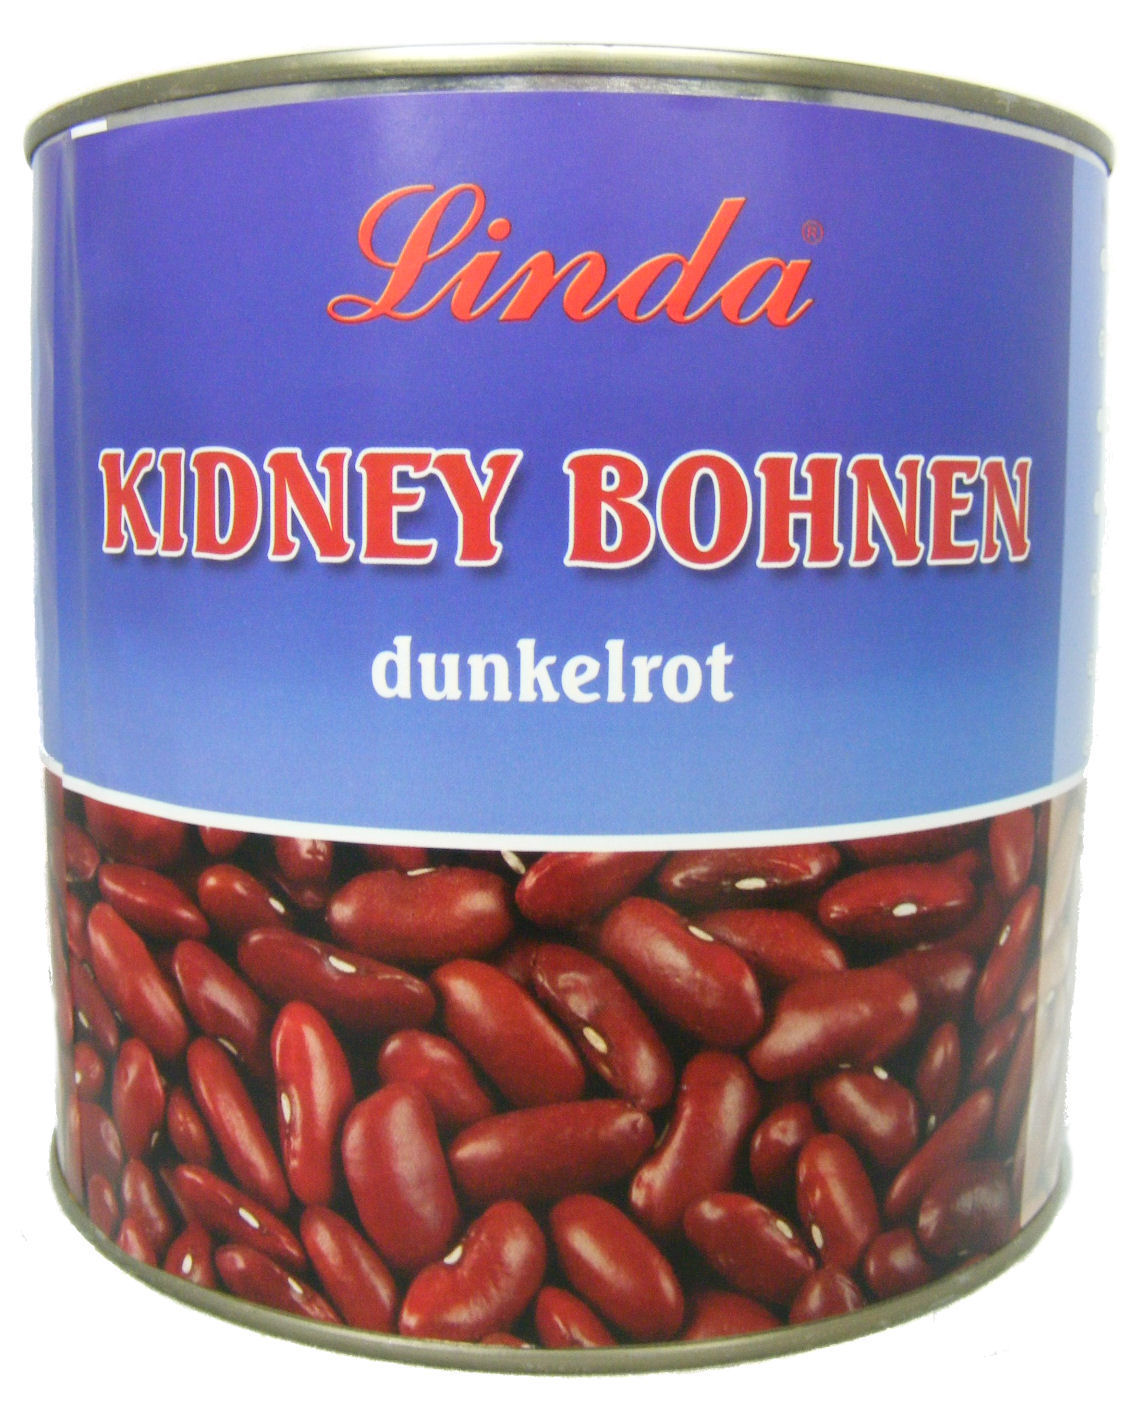 Kidney Bohnen 2650ml